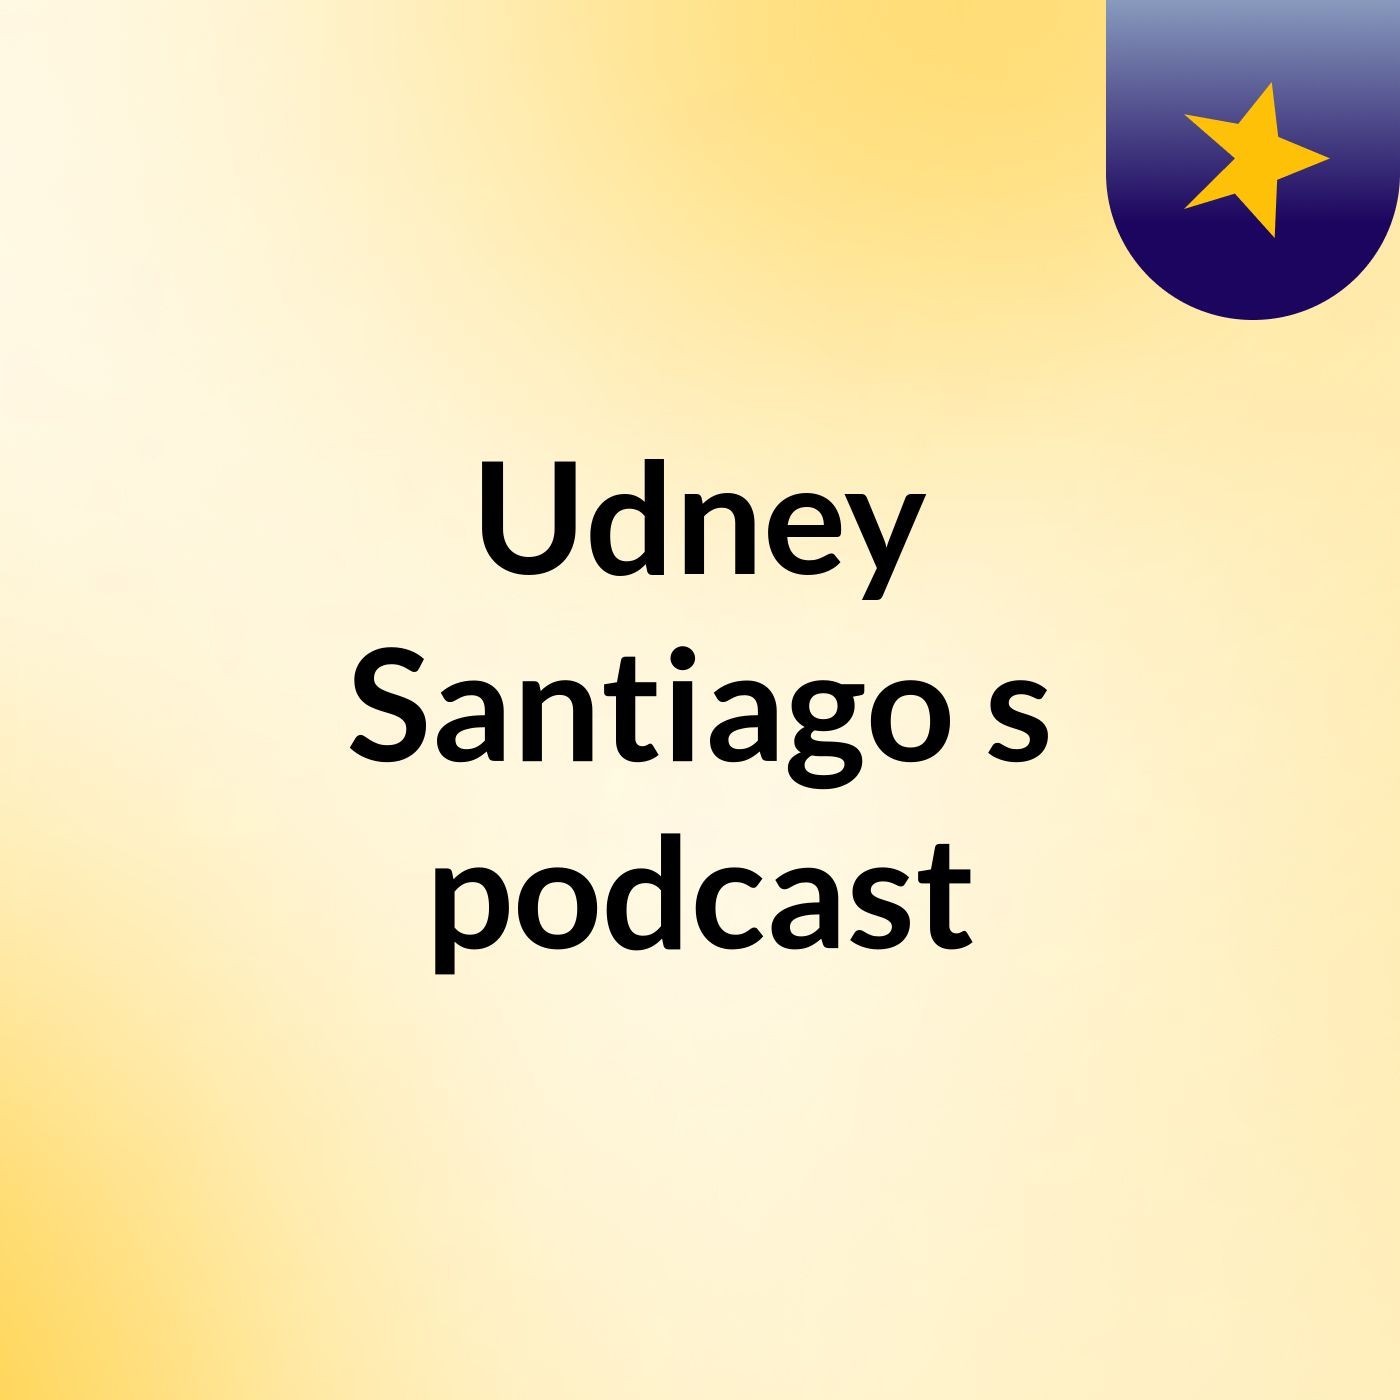 Episódio 12 - Udney Santiago's podcast